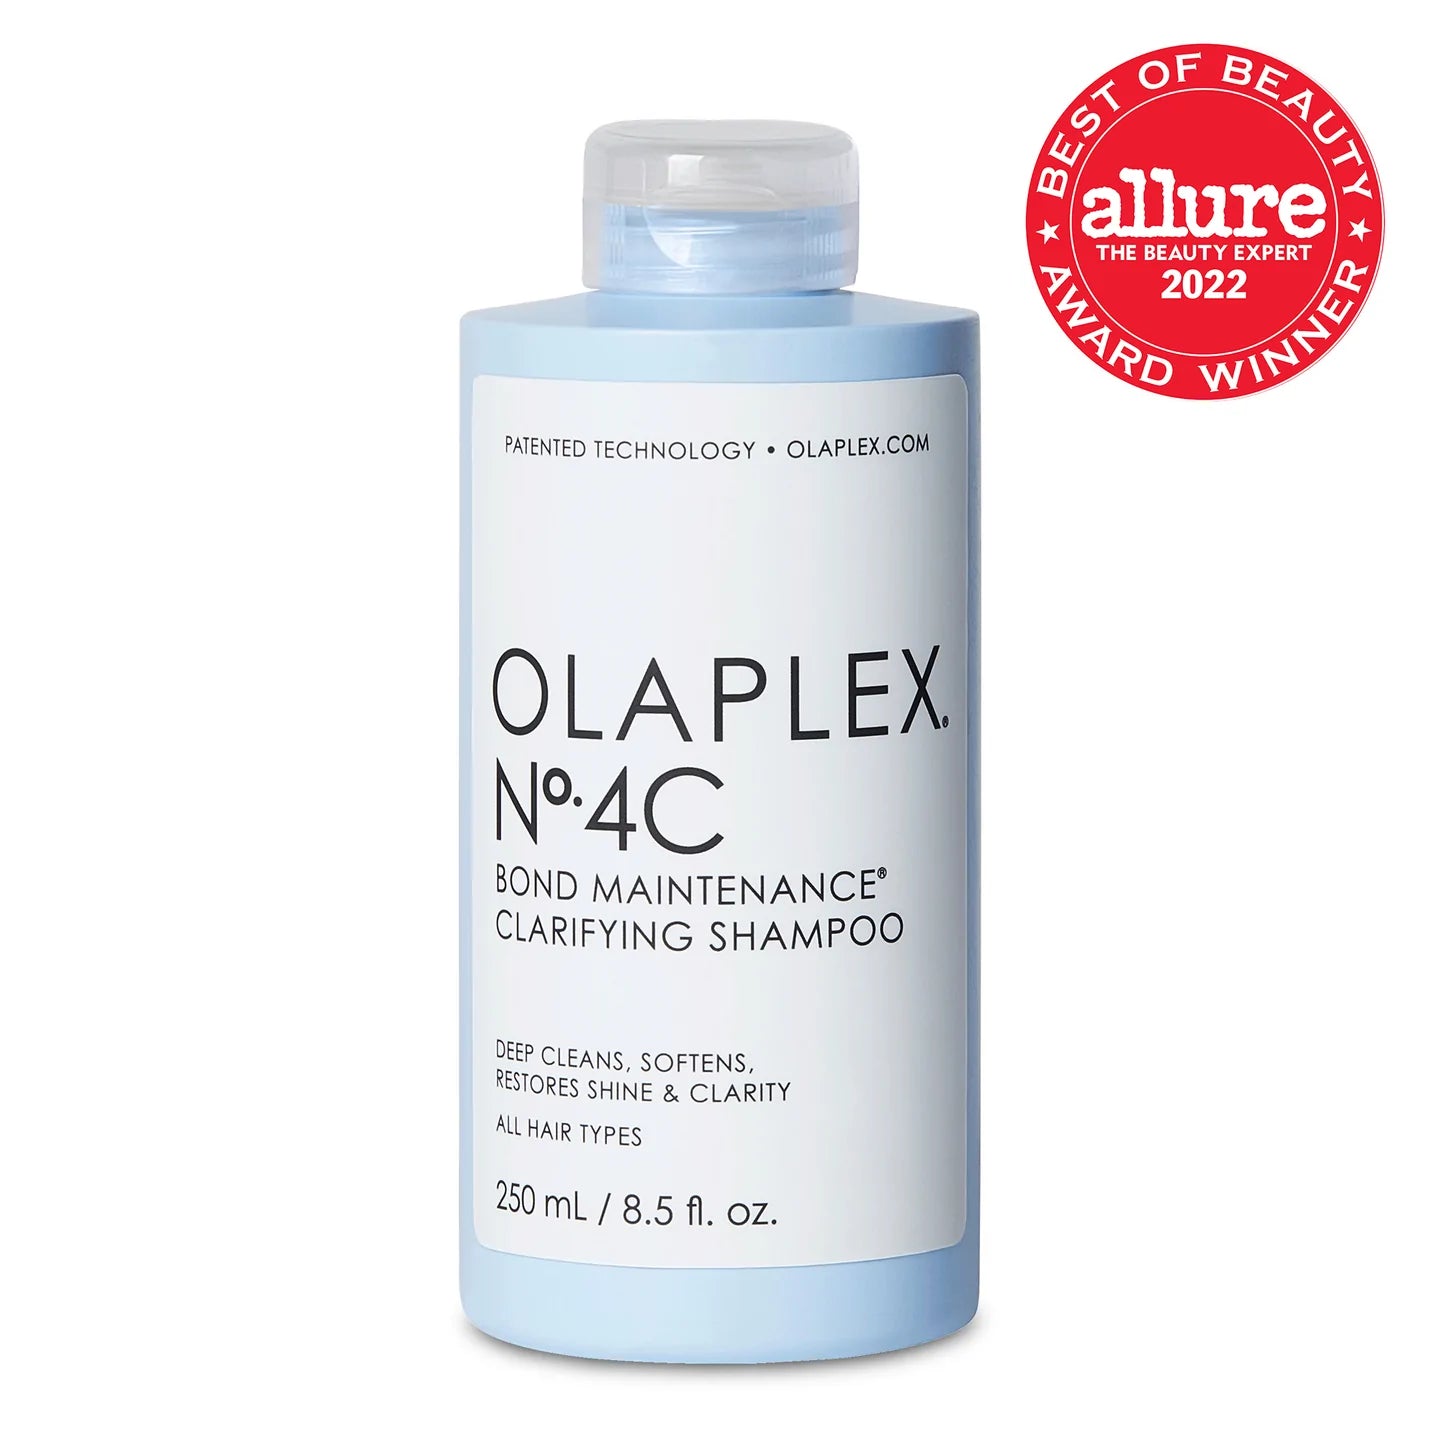 Olaplex N 4C bond maintenance clarfying shampoo